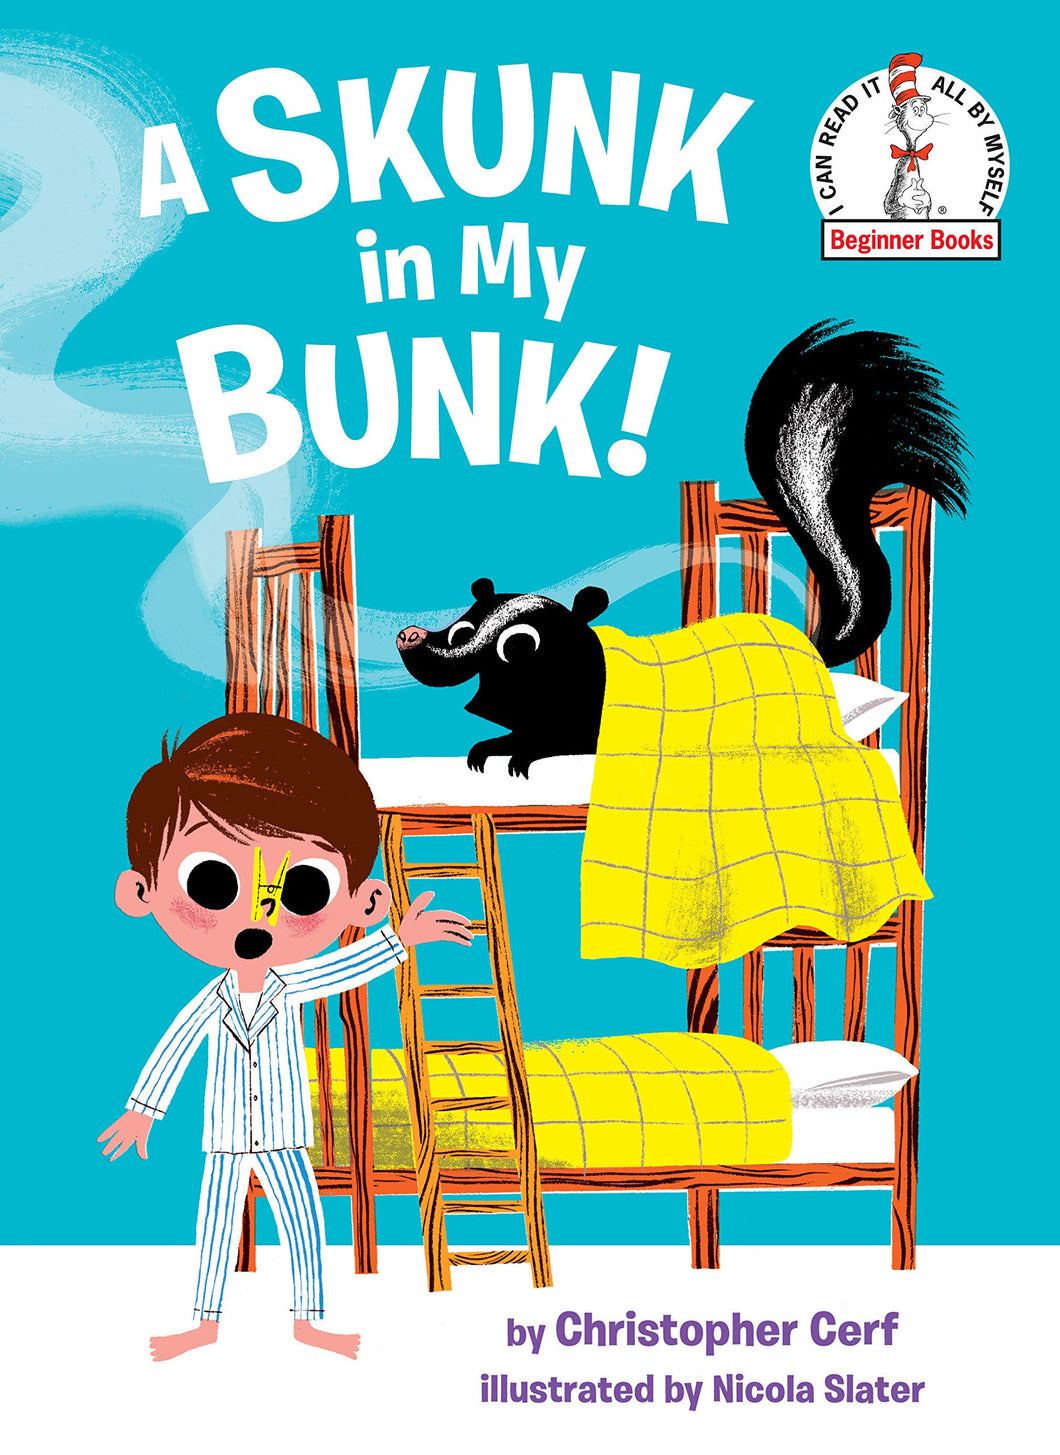 Dr Seuss Beginner Books A Skunk in My Bunk! Hardcover